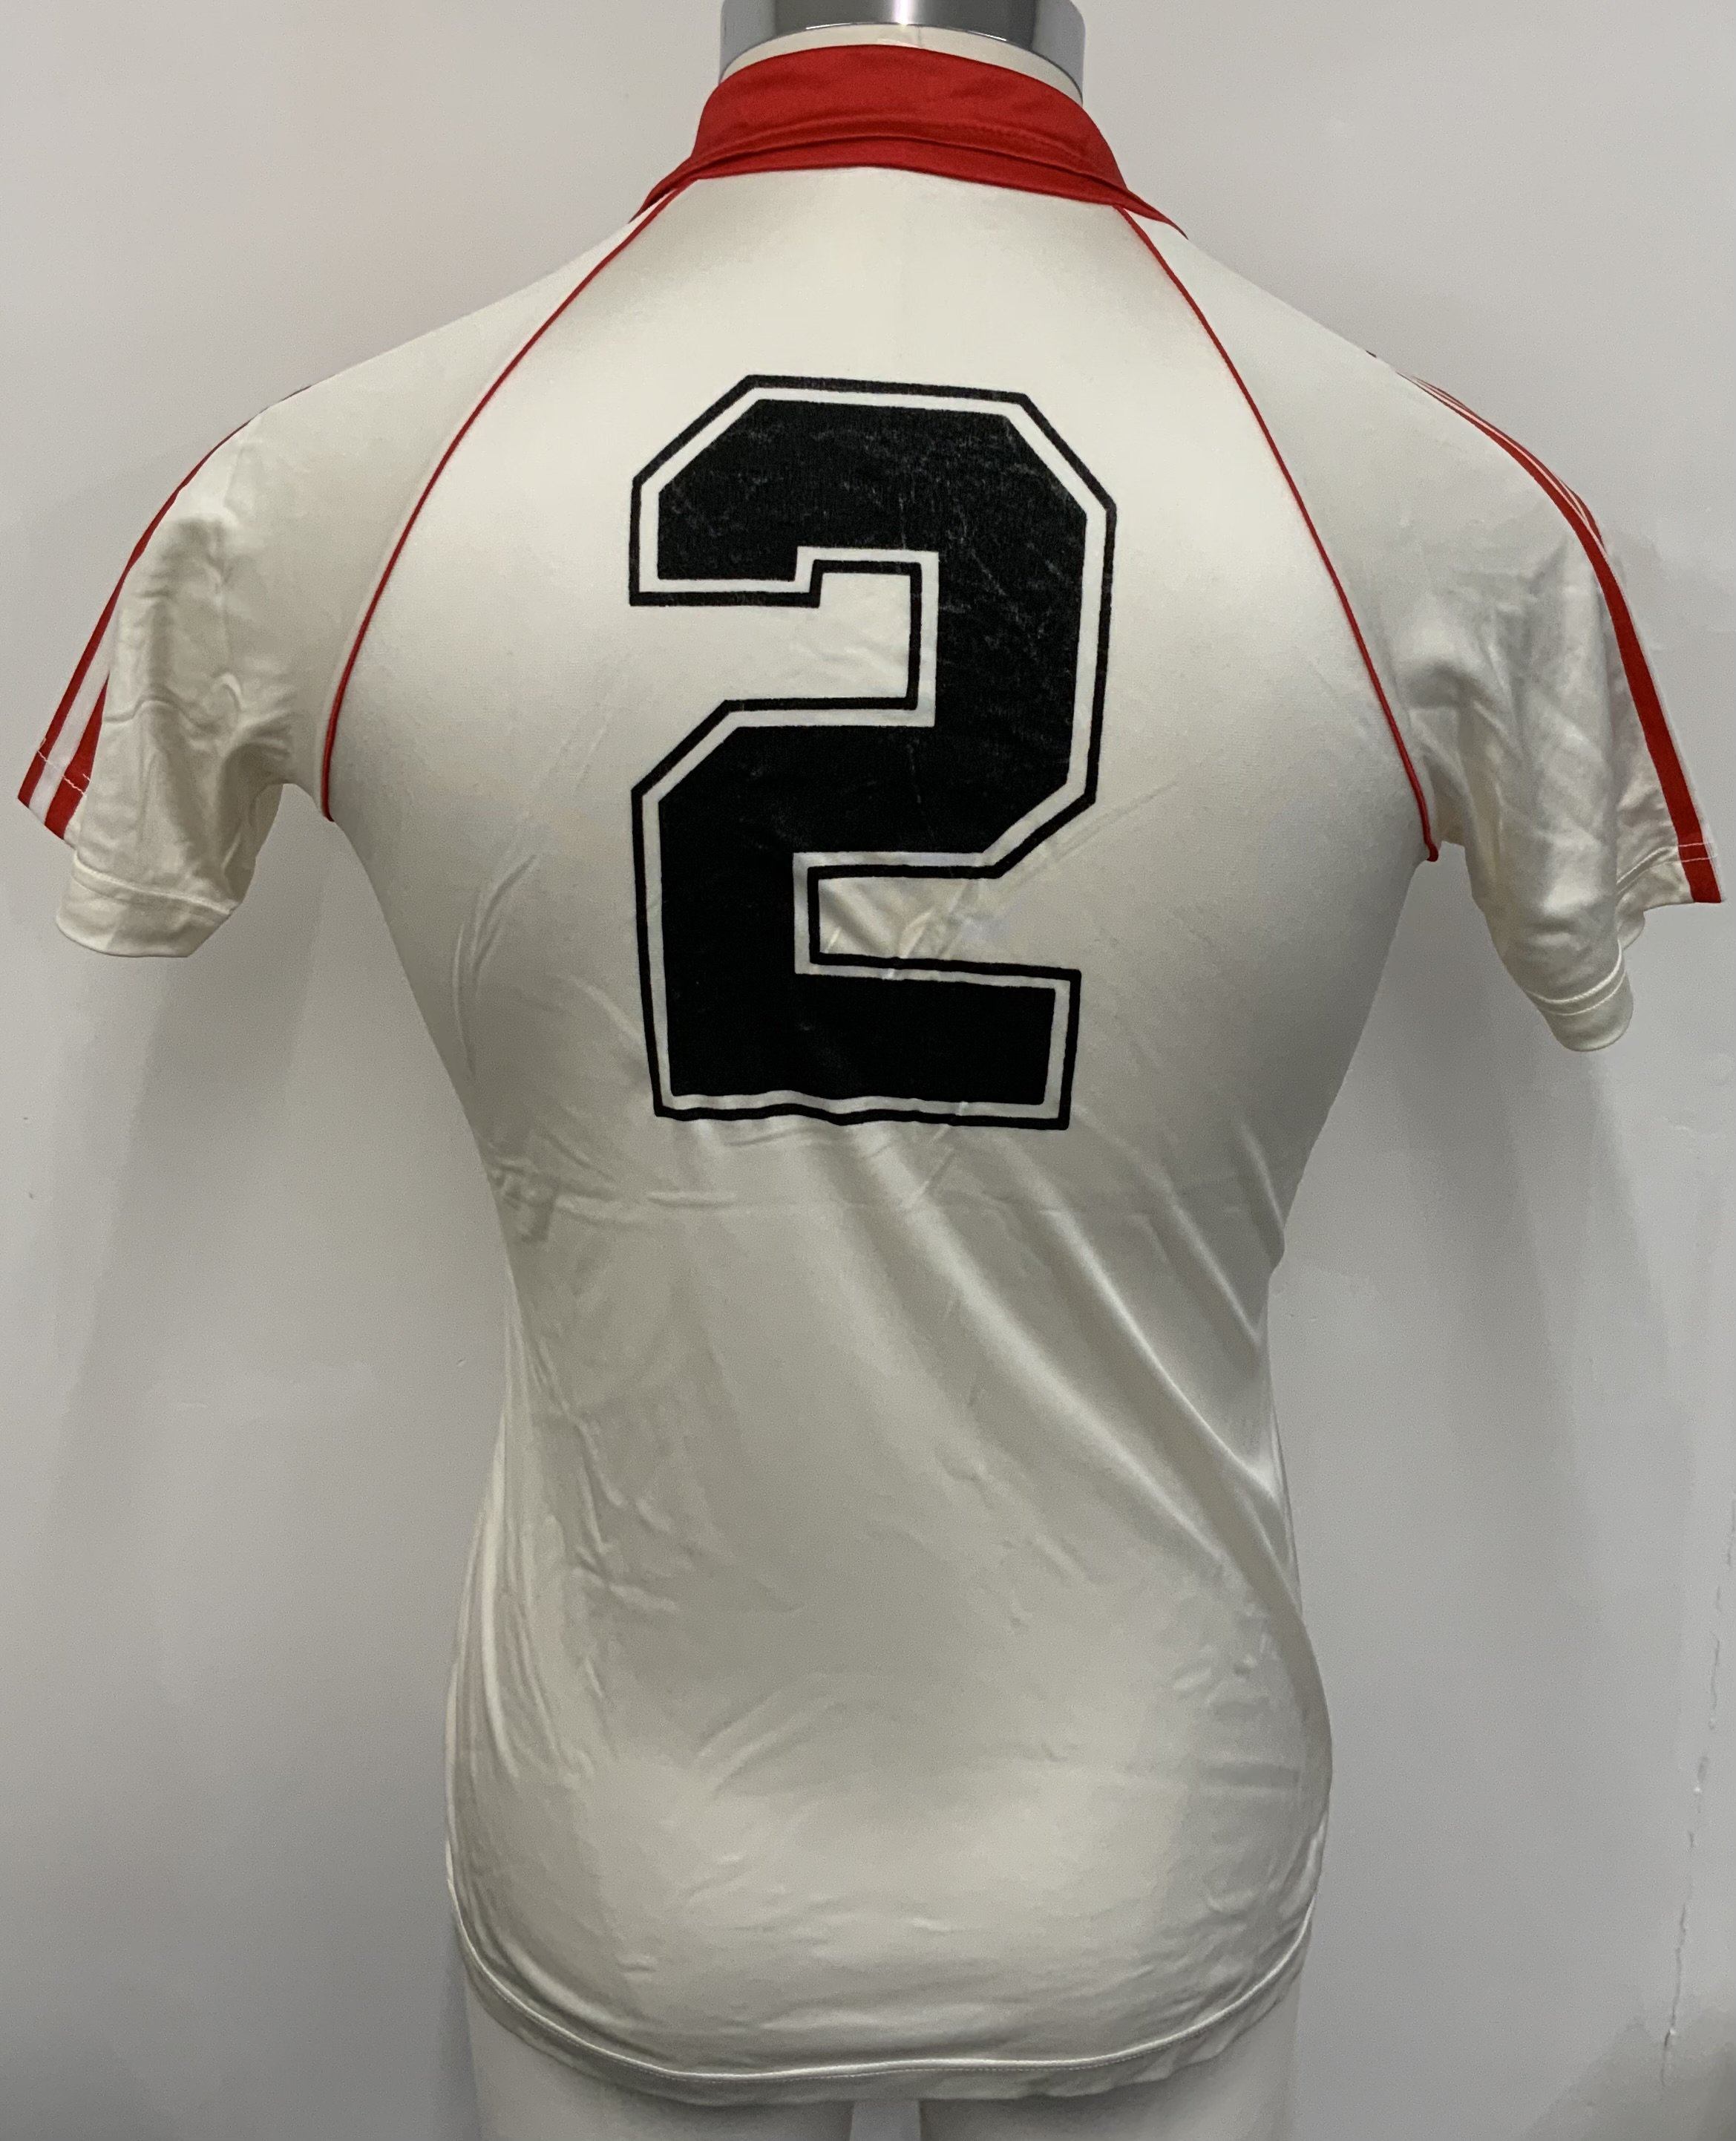 80/81 Seville Match Worn Football Shirt: White wit - Image 2 of 3